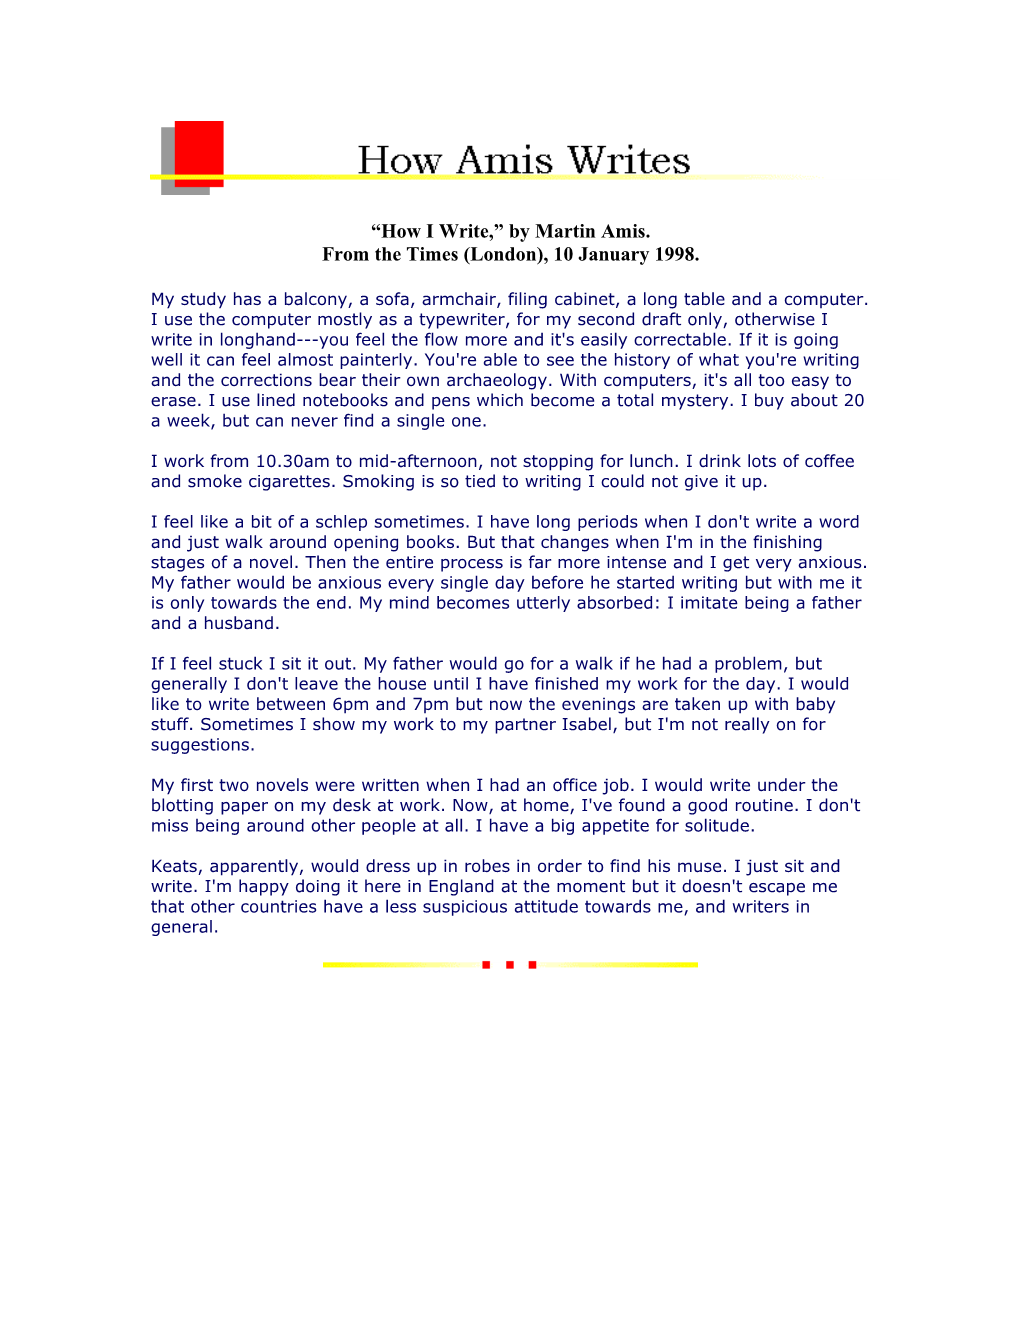 How I Write, by Martin Amis